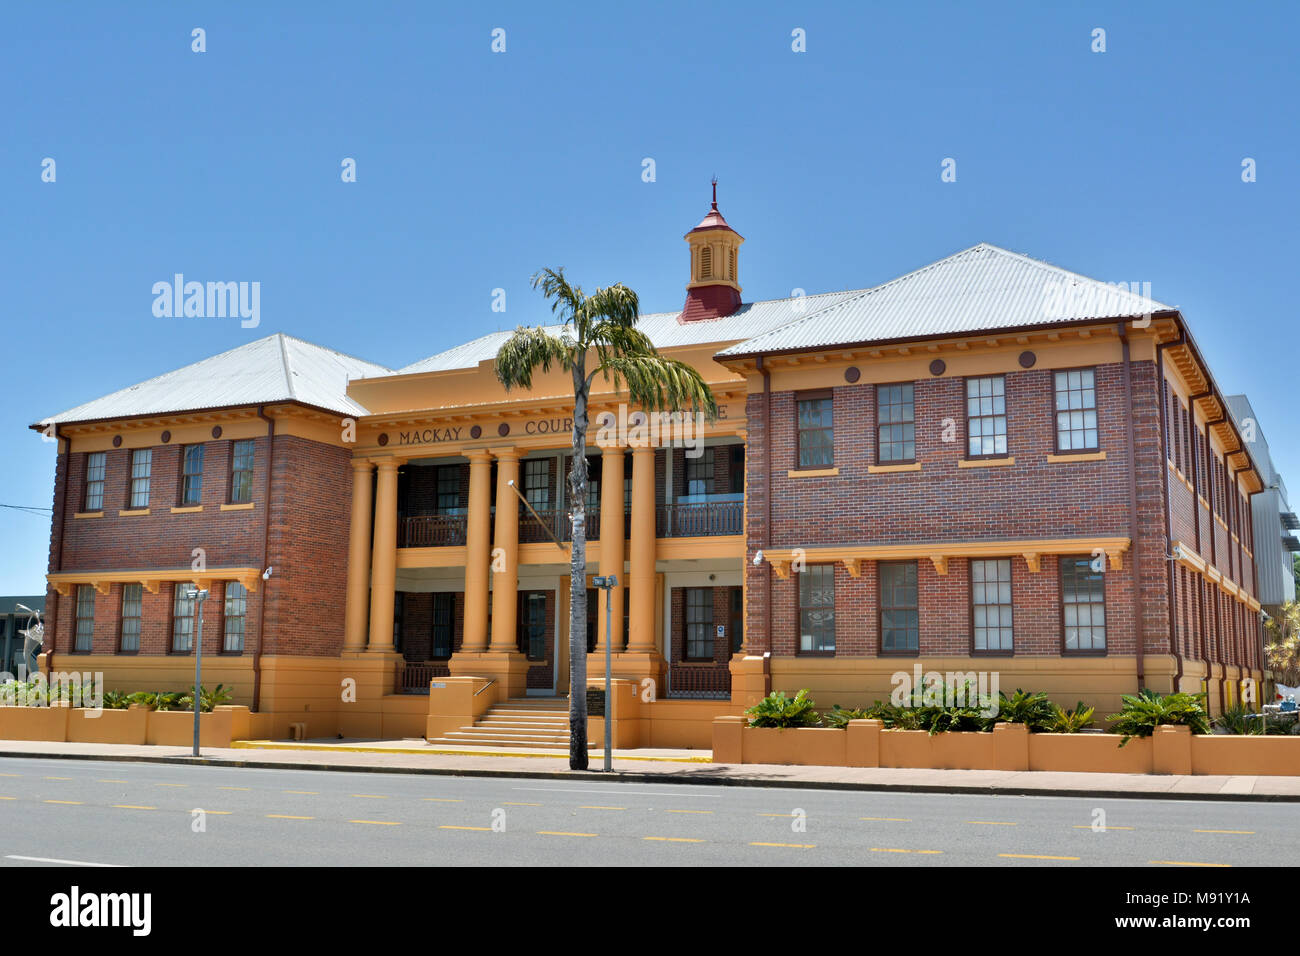 Mackay, Queensland, Australia - December 28, 2017. Historic Mackay Court House in Mackay QLD, with vegetation. Stock Photo